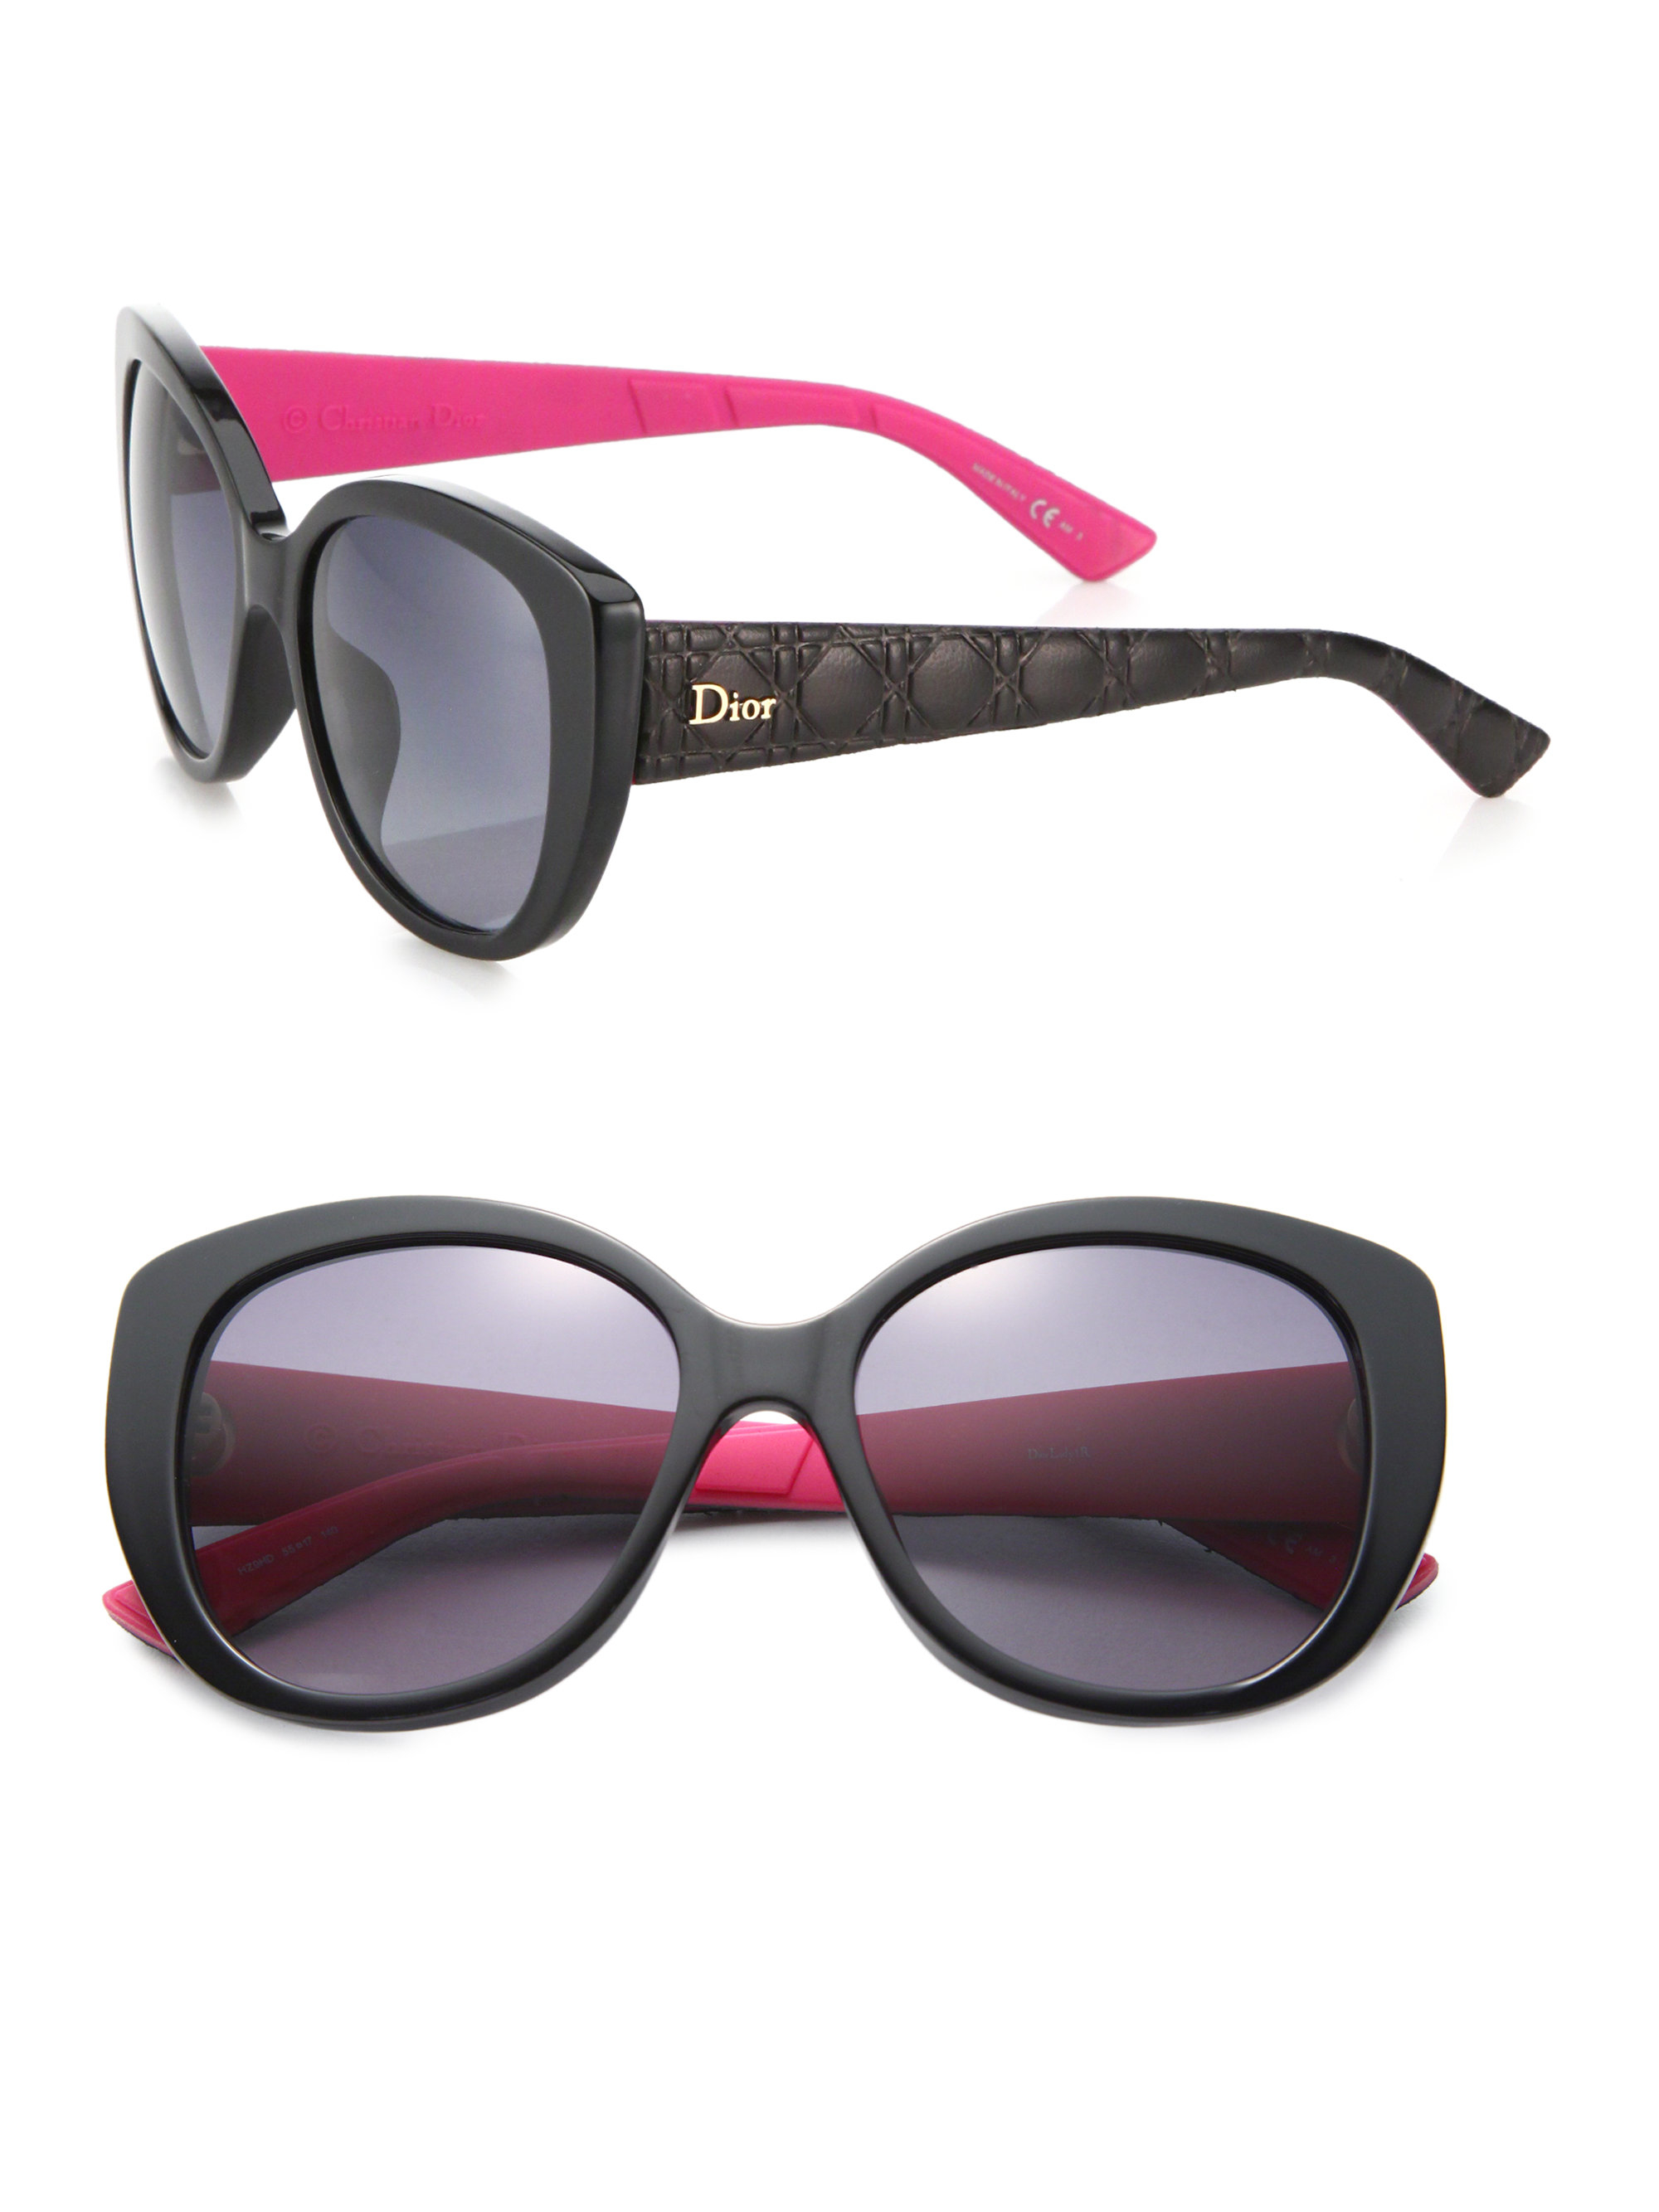 Lyst - Dior Lady I 55mm Round Sunglasses in Black